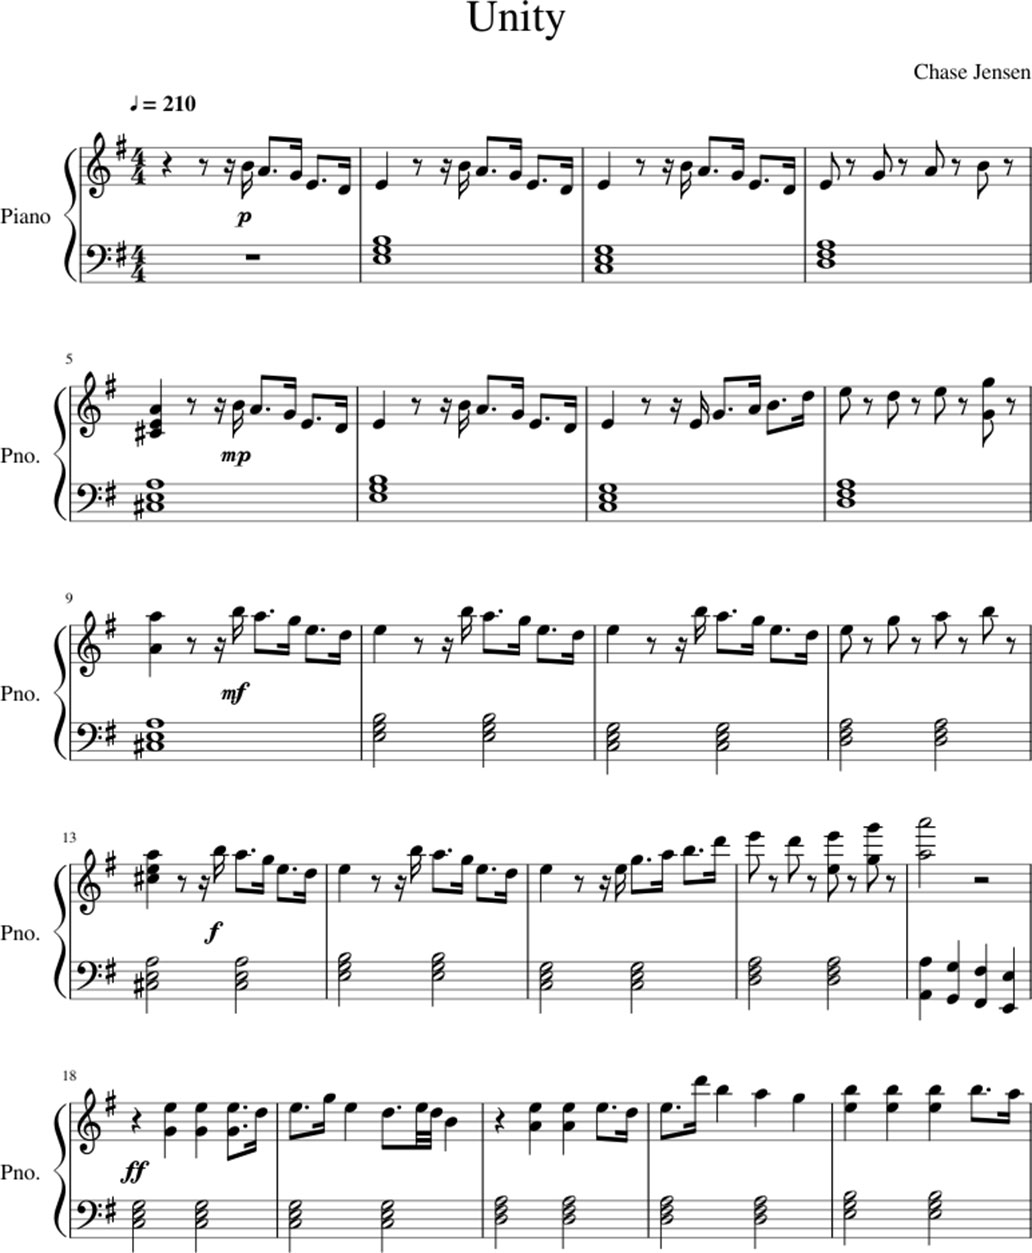 Unity sheet music notes 1